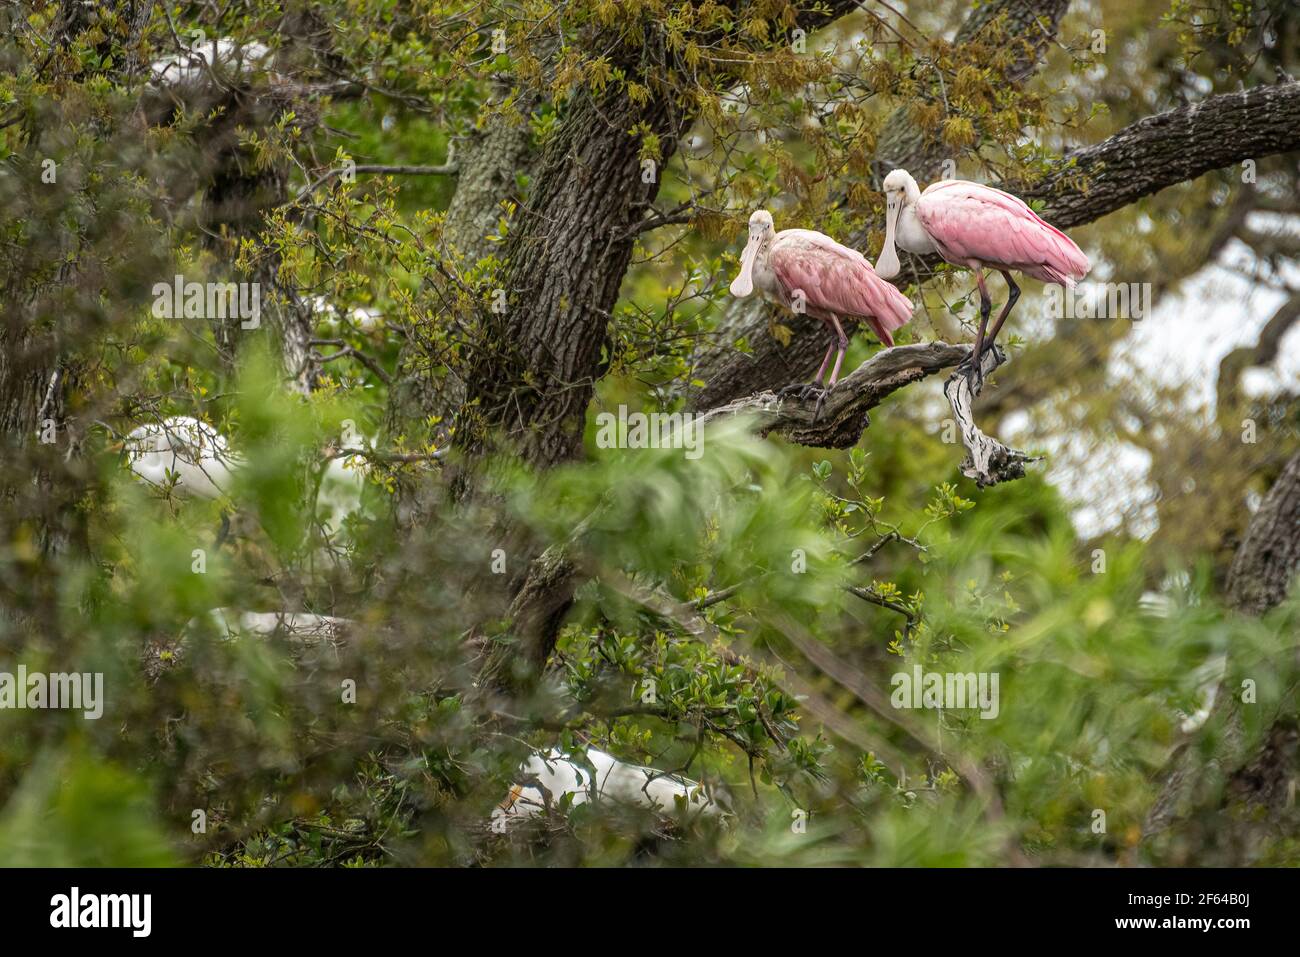 Rosate le spatole (Platalea ajaja) e annidate le grandi egrette (Ardea alba) in un rookery di uccelli in palafitte a St. Augustine, Florida. (STATI UNITI) Foto Stock